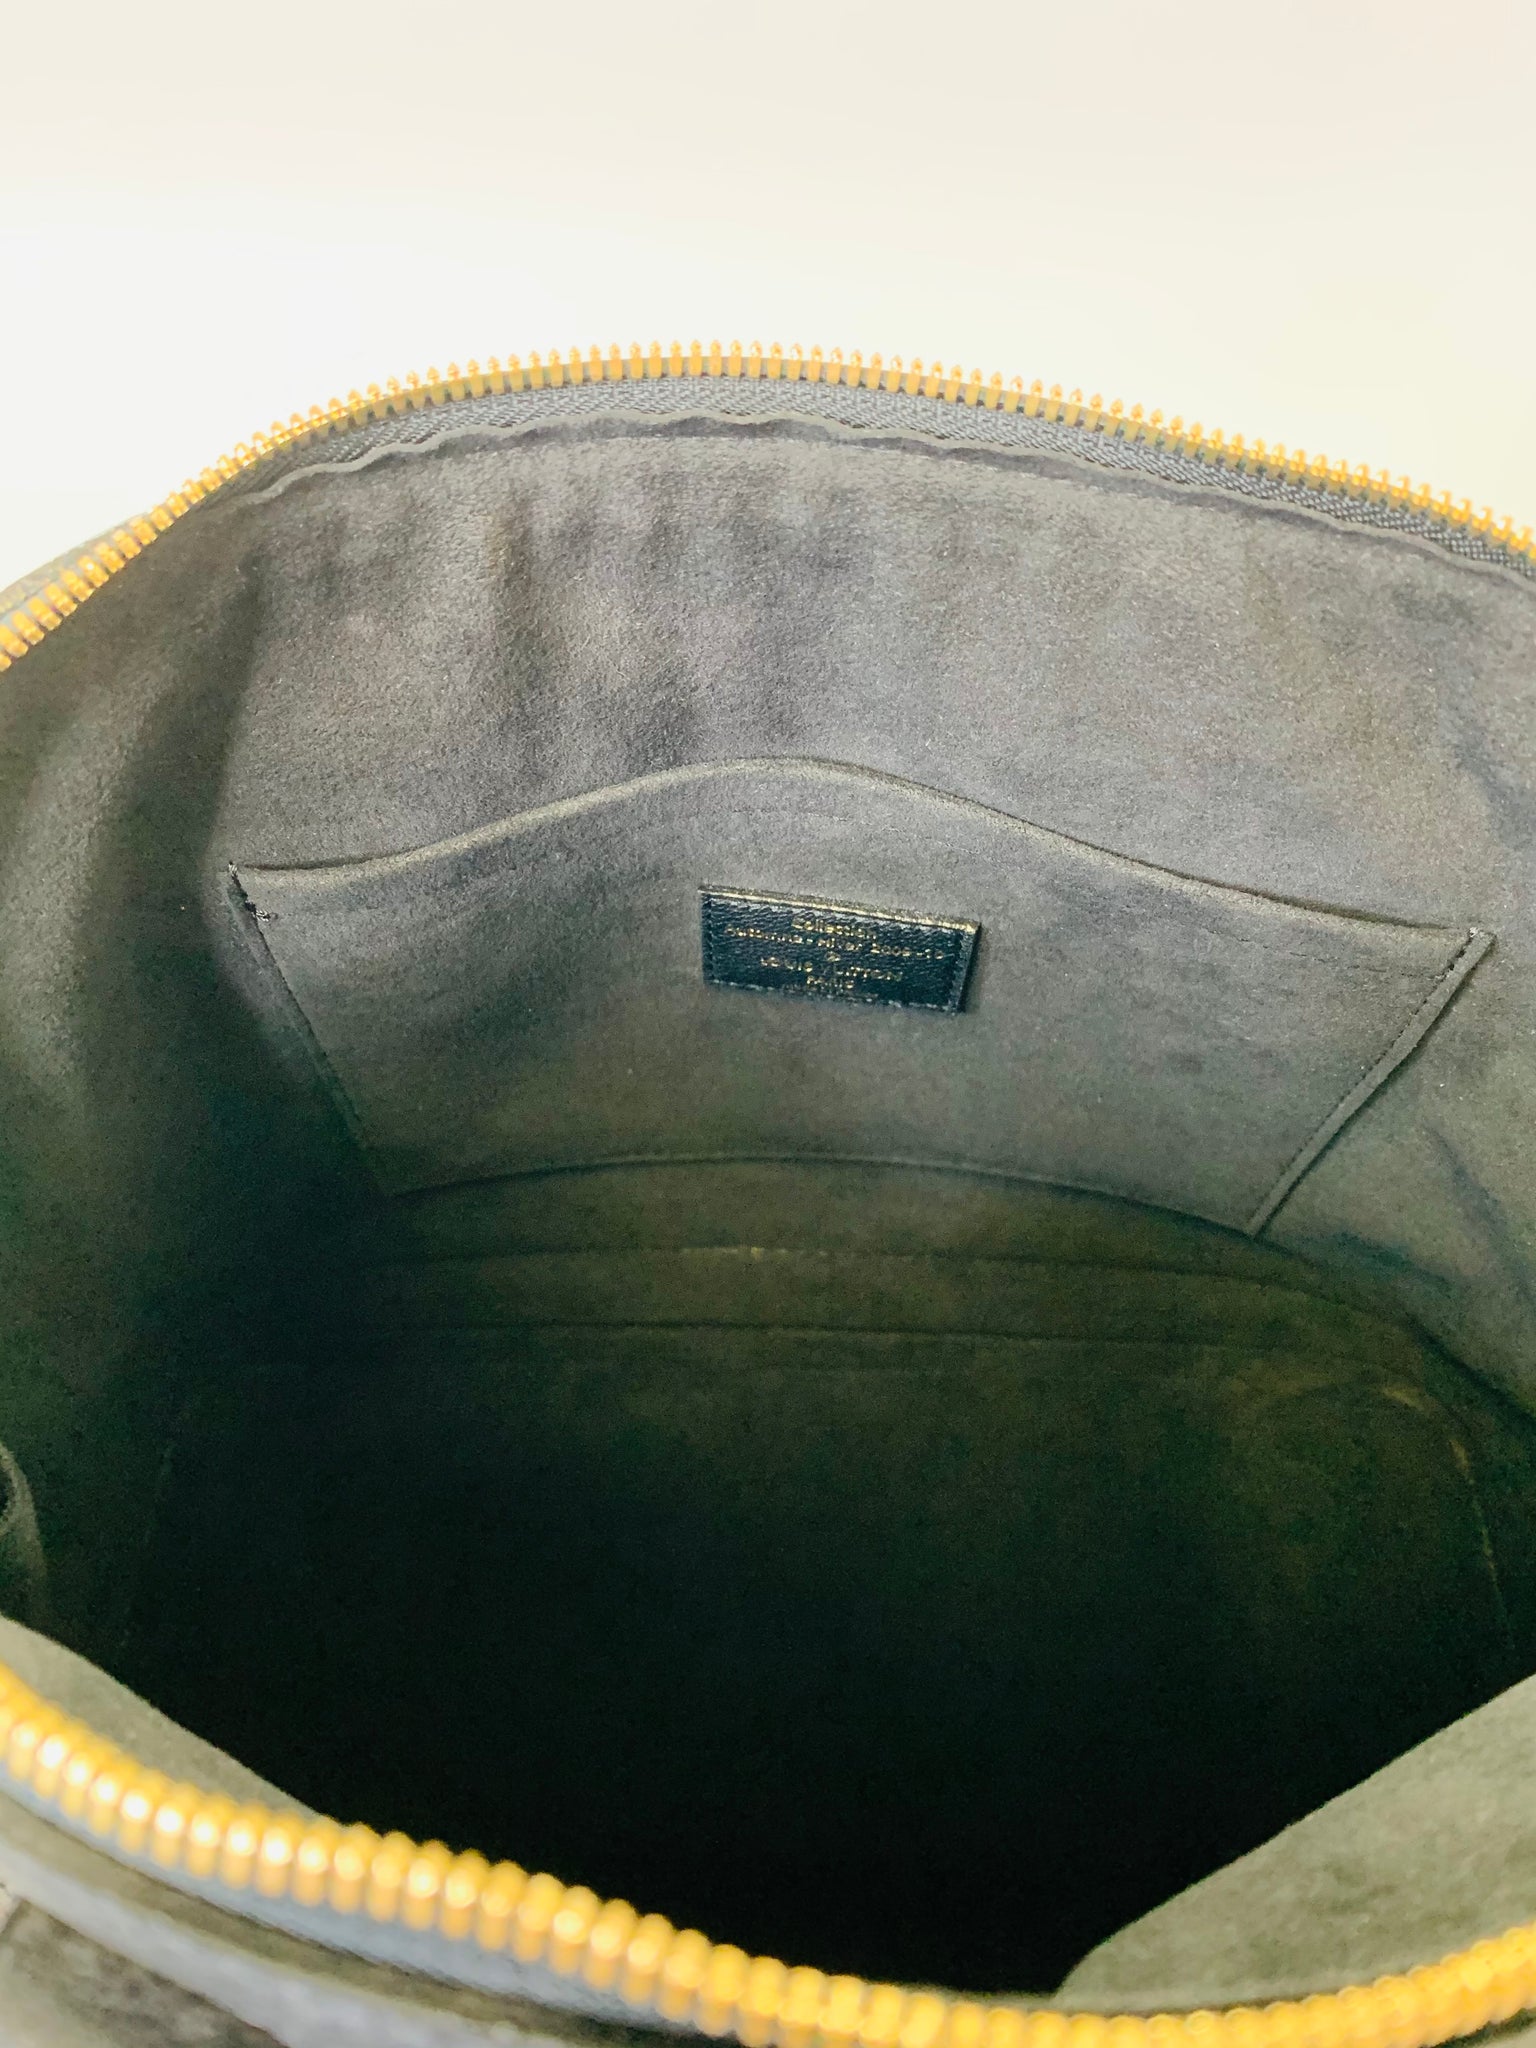 Louis Vuitton Limited Edition Eclipse Alma MM Handbag